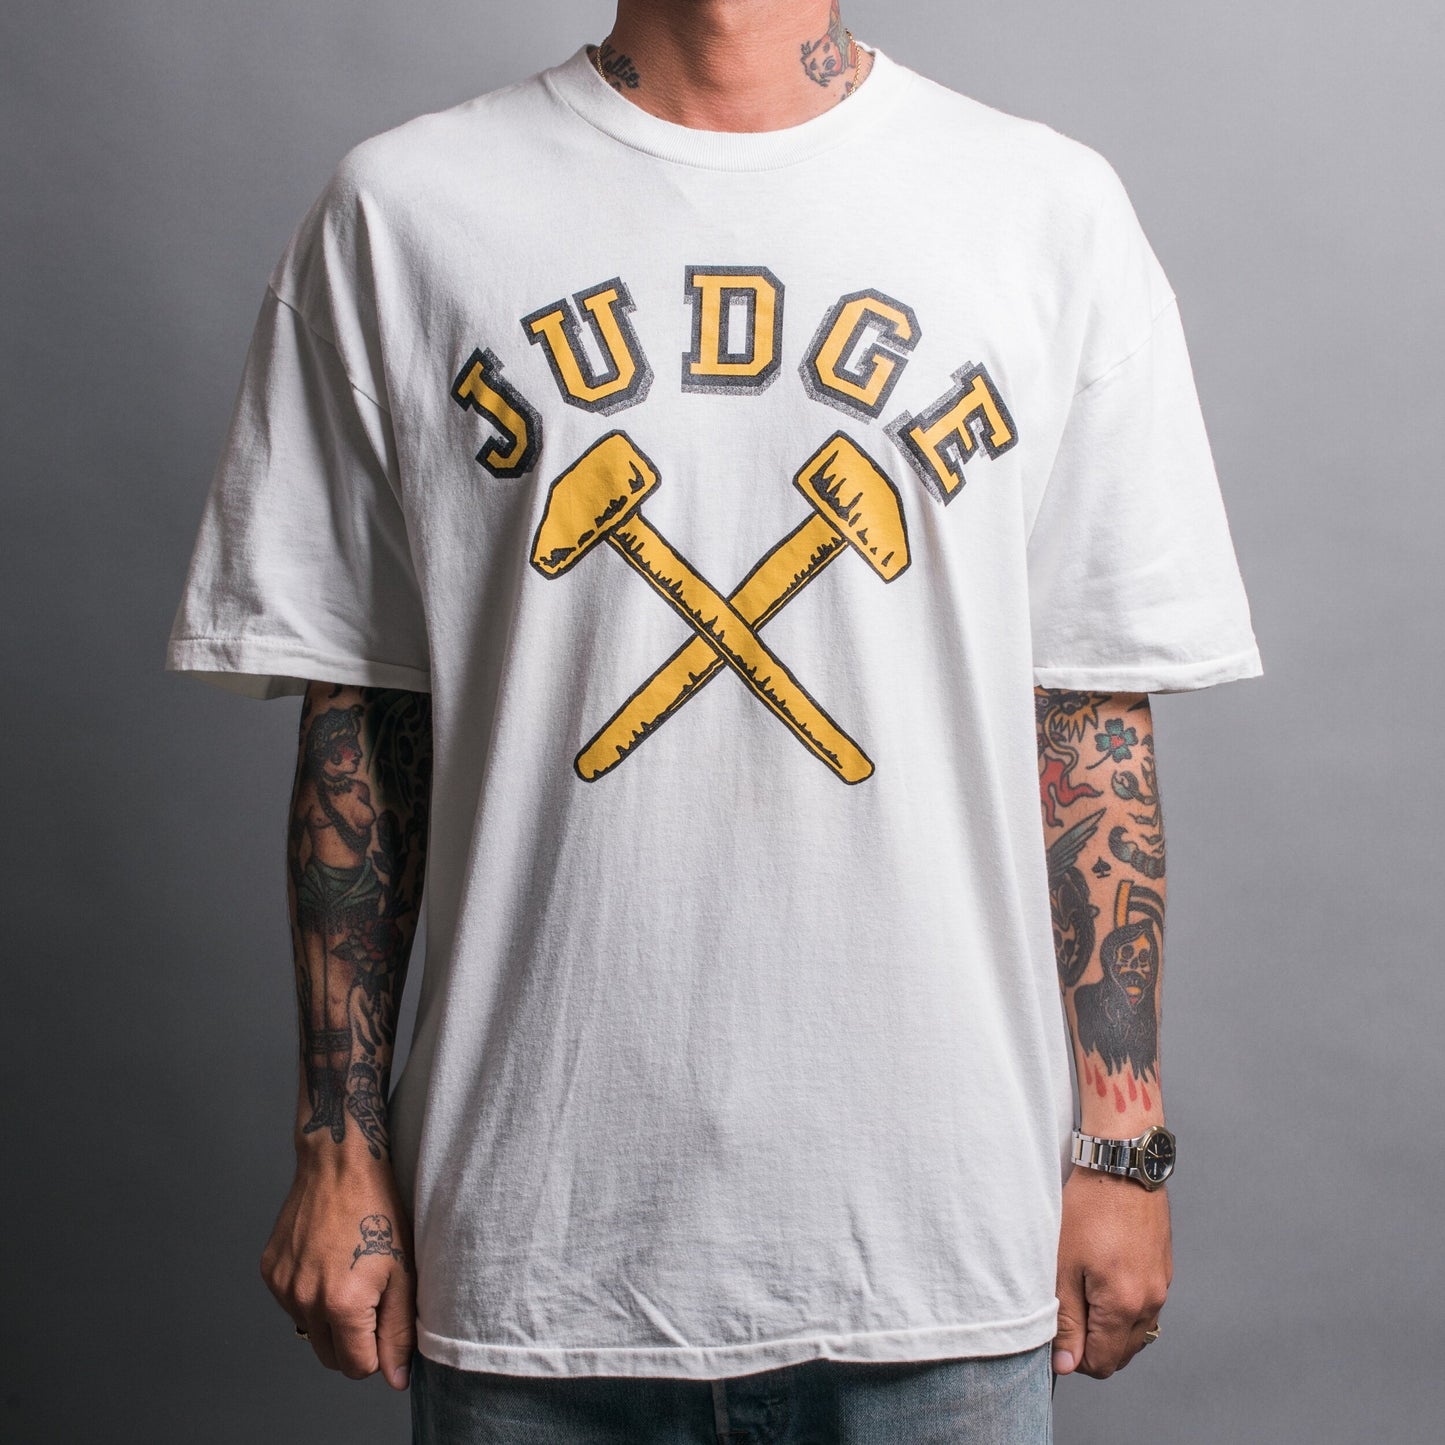 Vintage 90’s Judge Bringin’ It Down T-Shirt